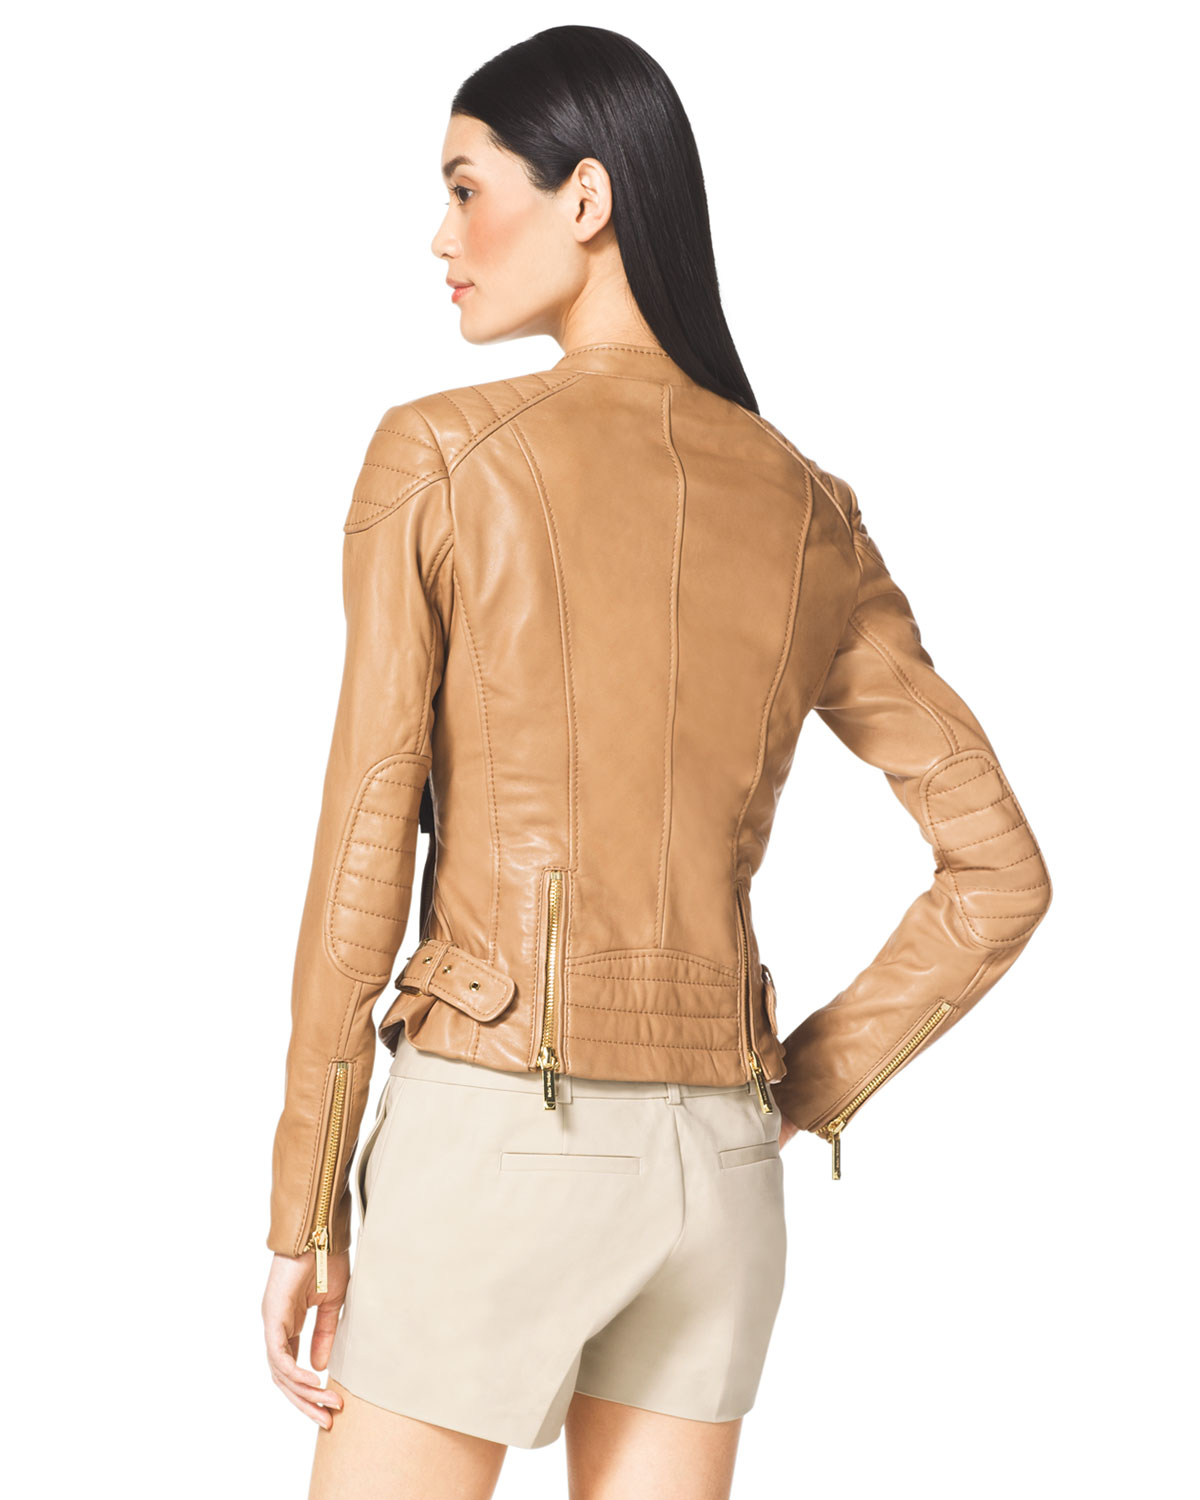 Lyst - Michael Kors Michael Leather Moto Jacket in Brown